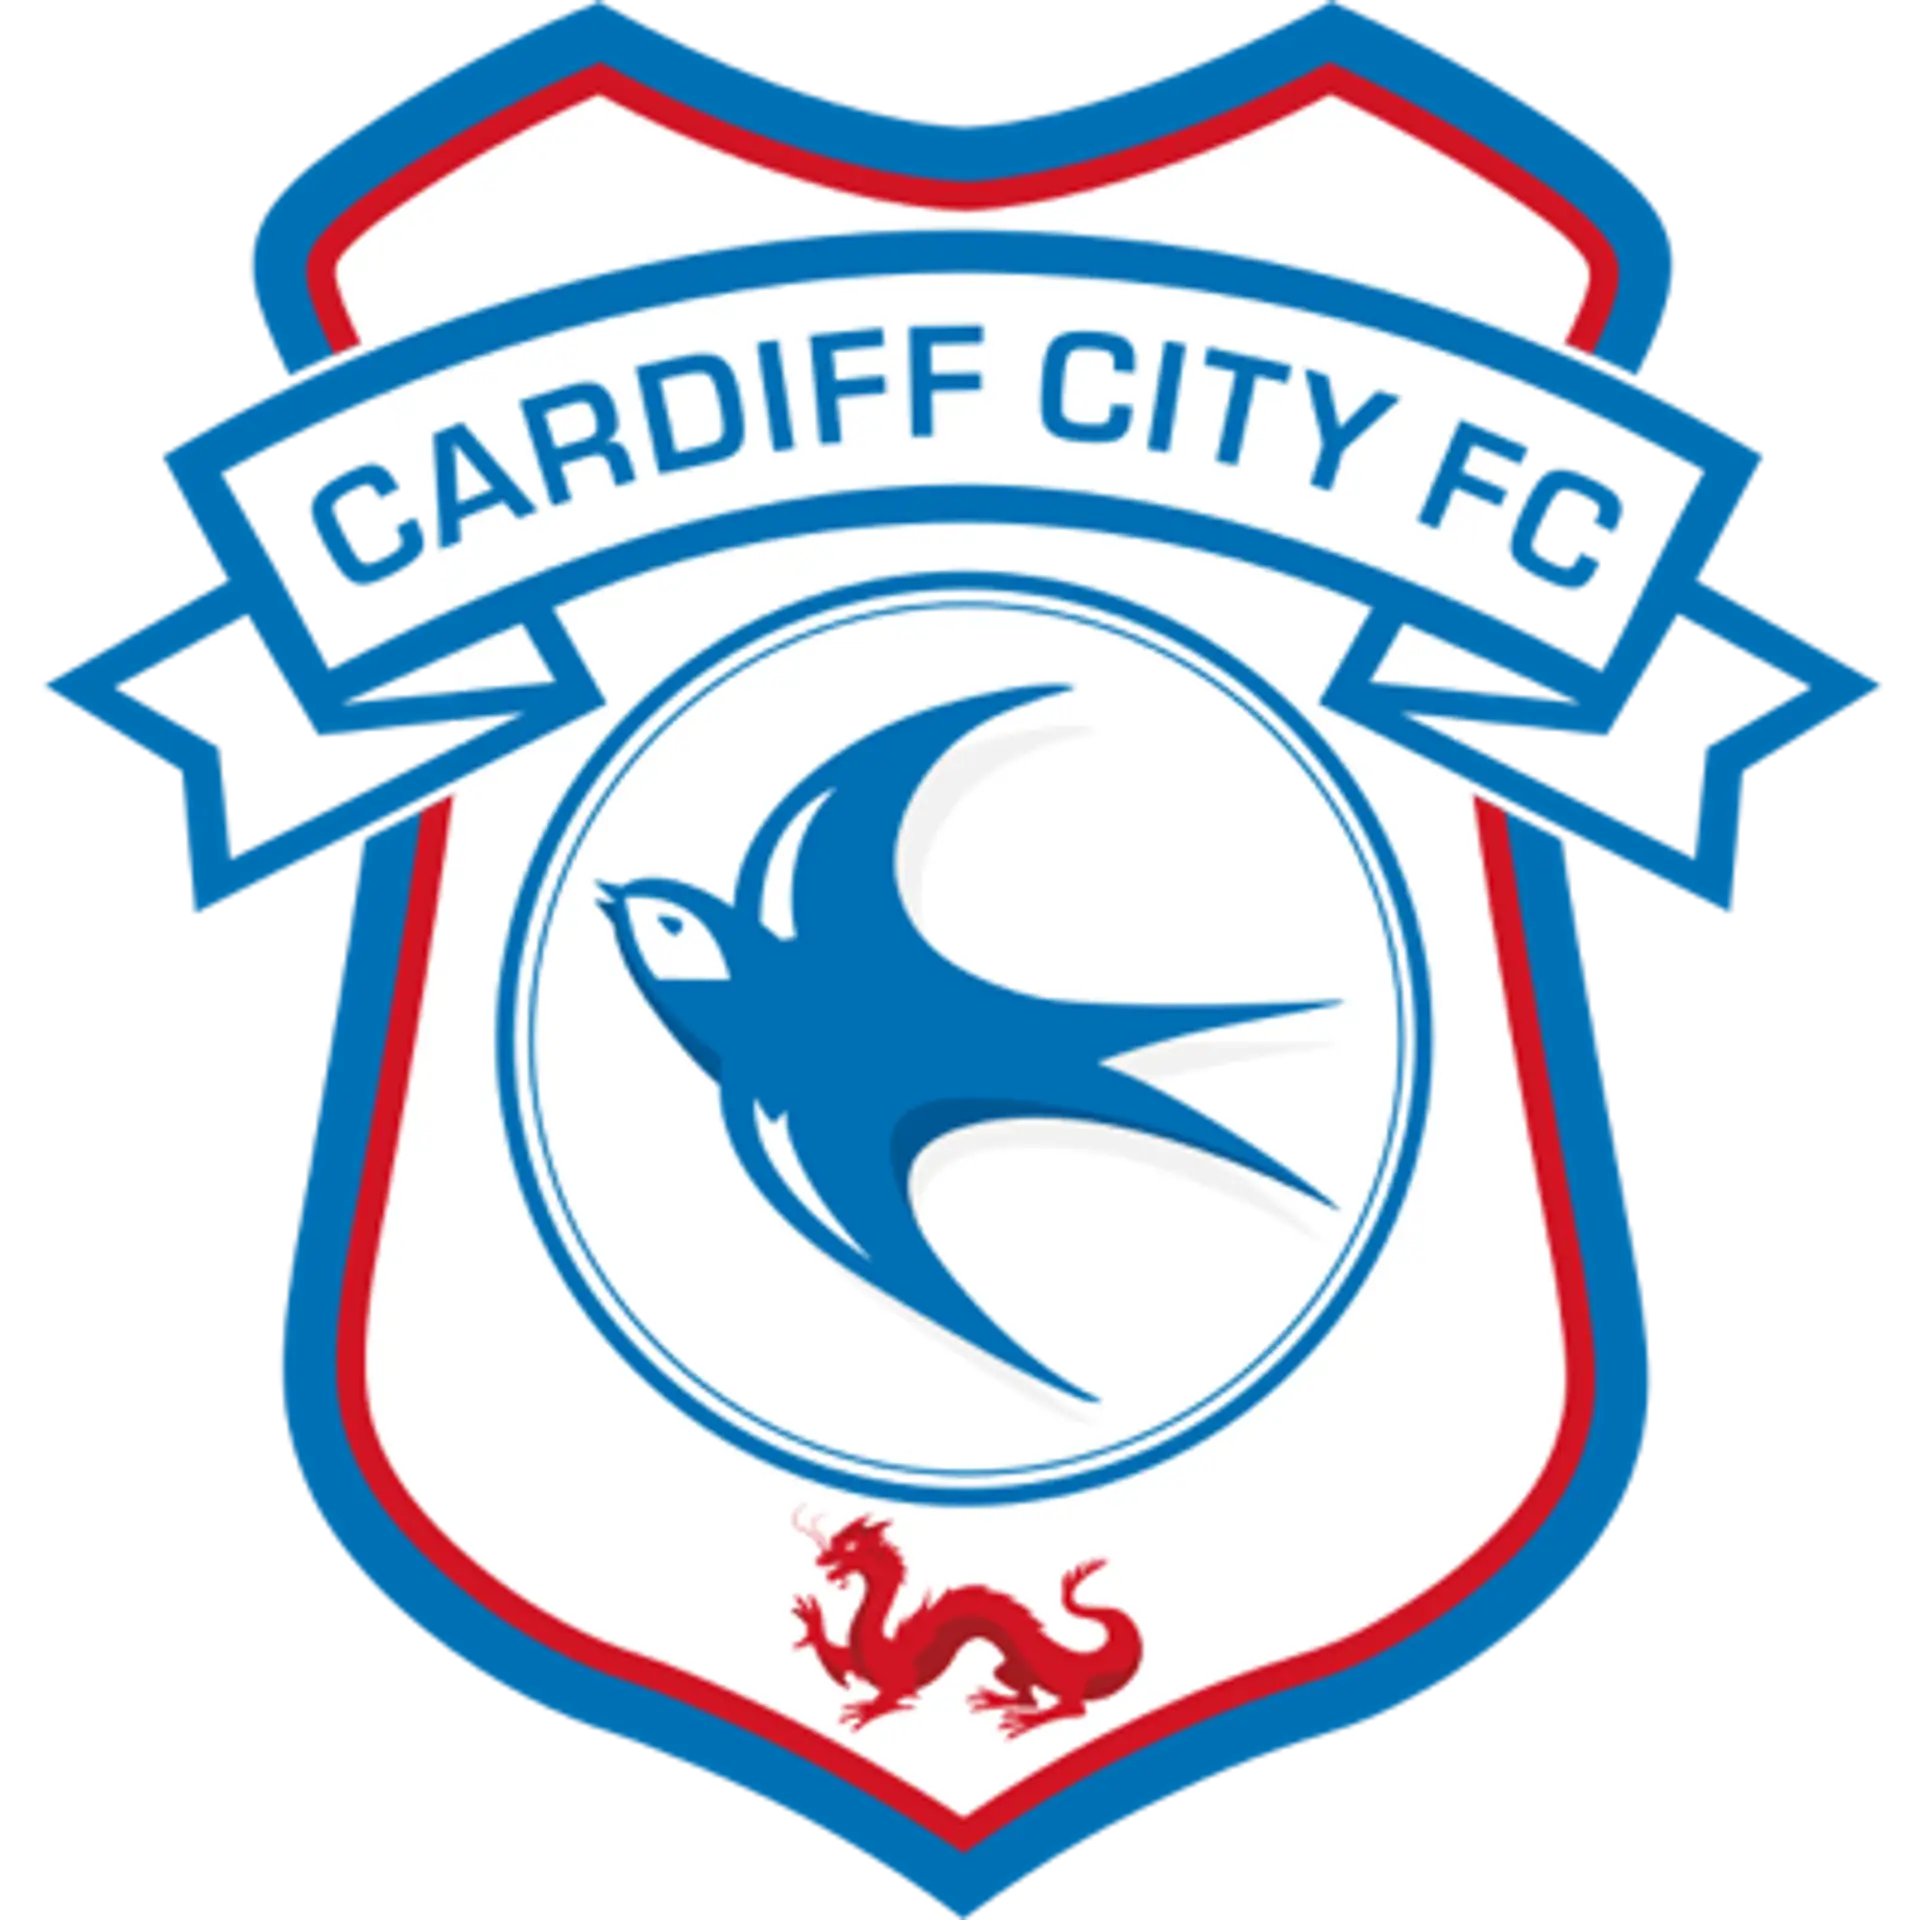 Cardiff City Squad